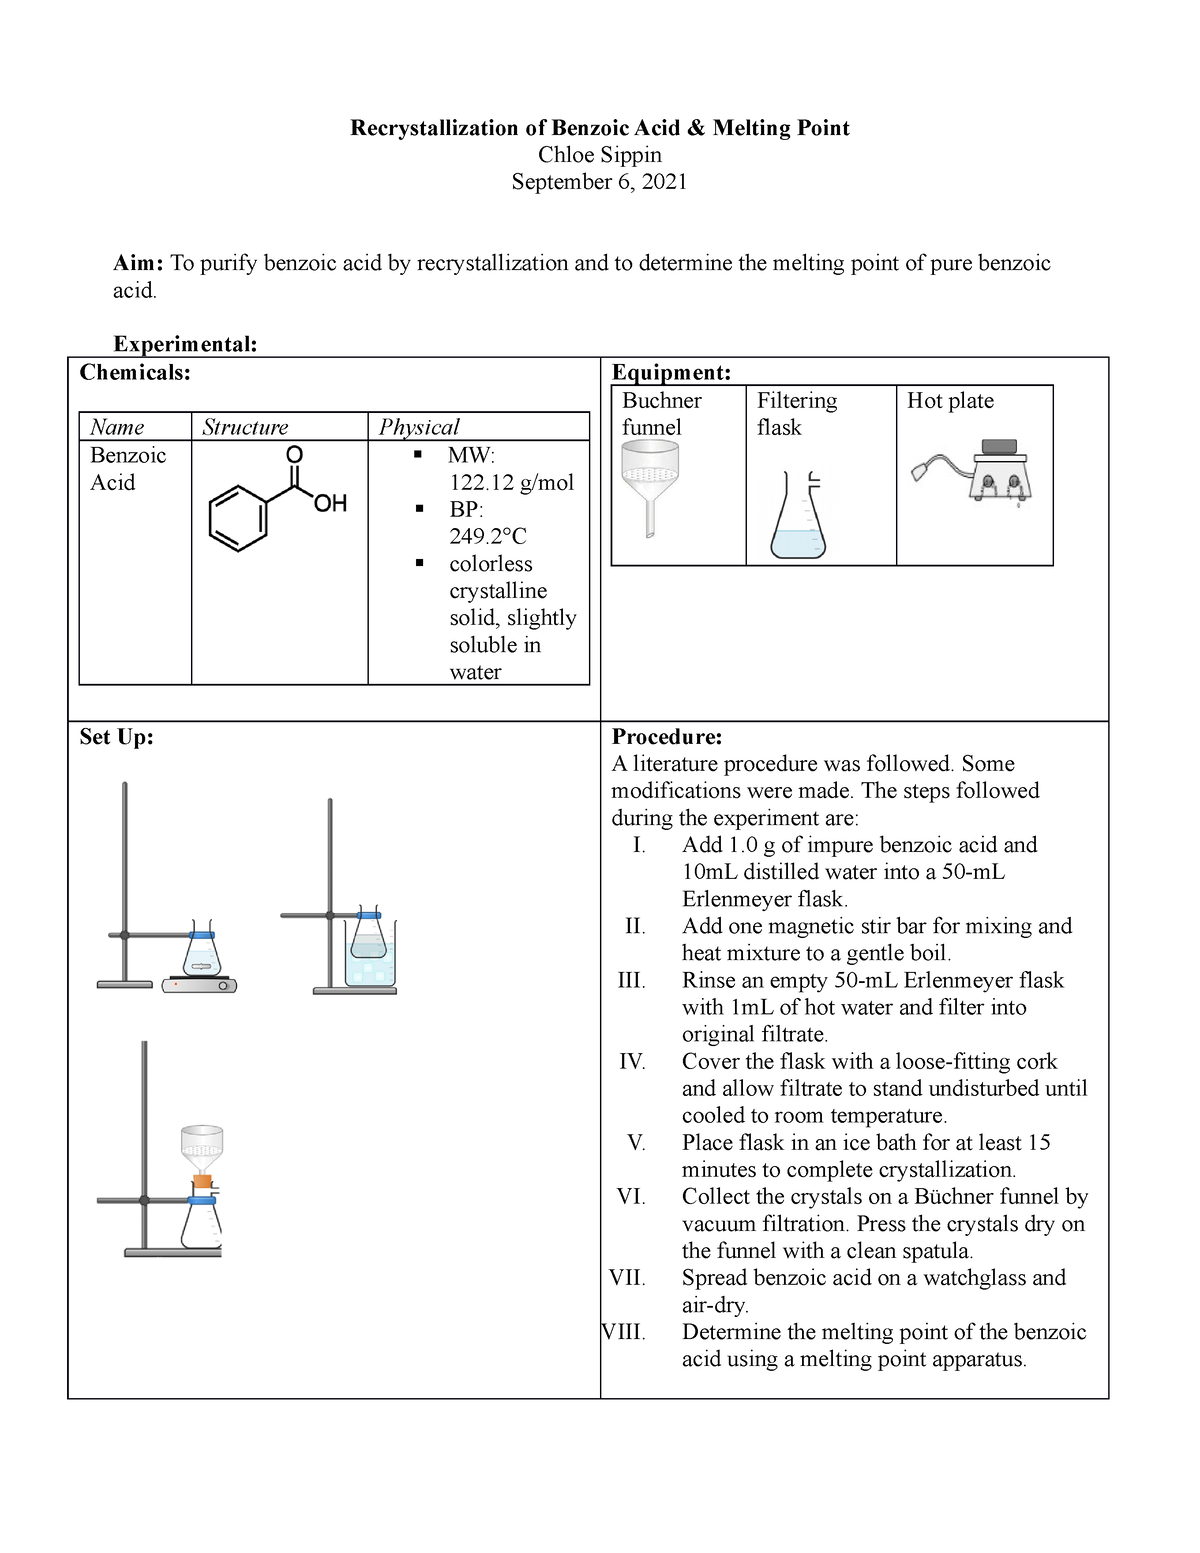 Recrystallization of benzoic acid lab report - Recrystallization of ...